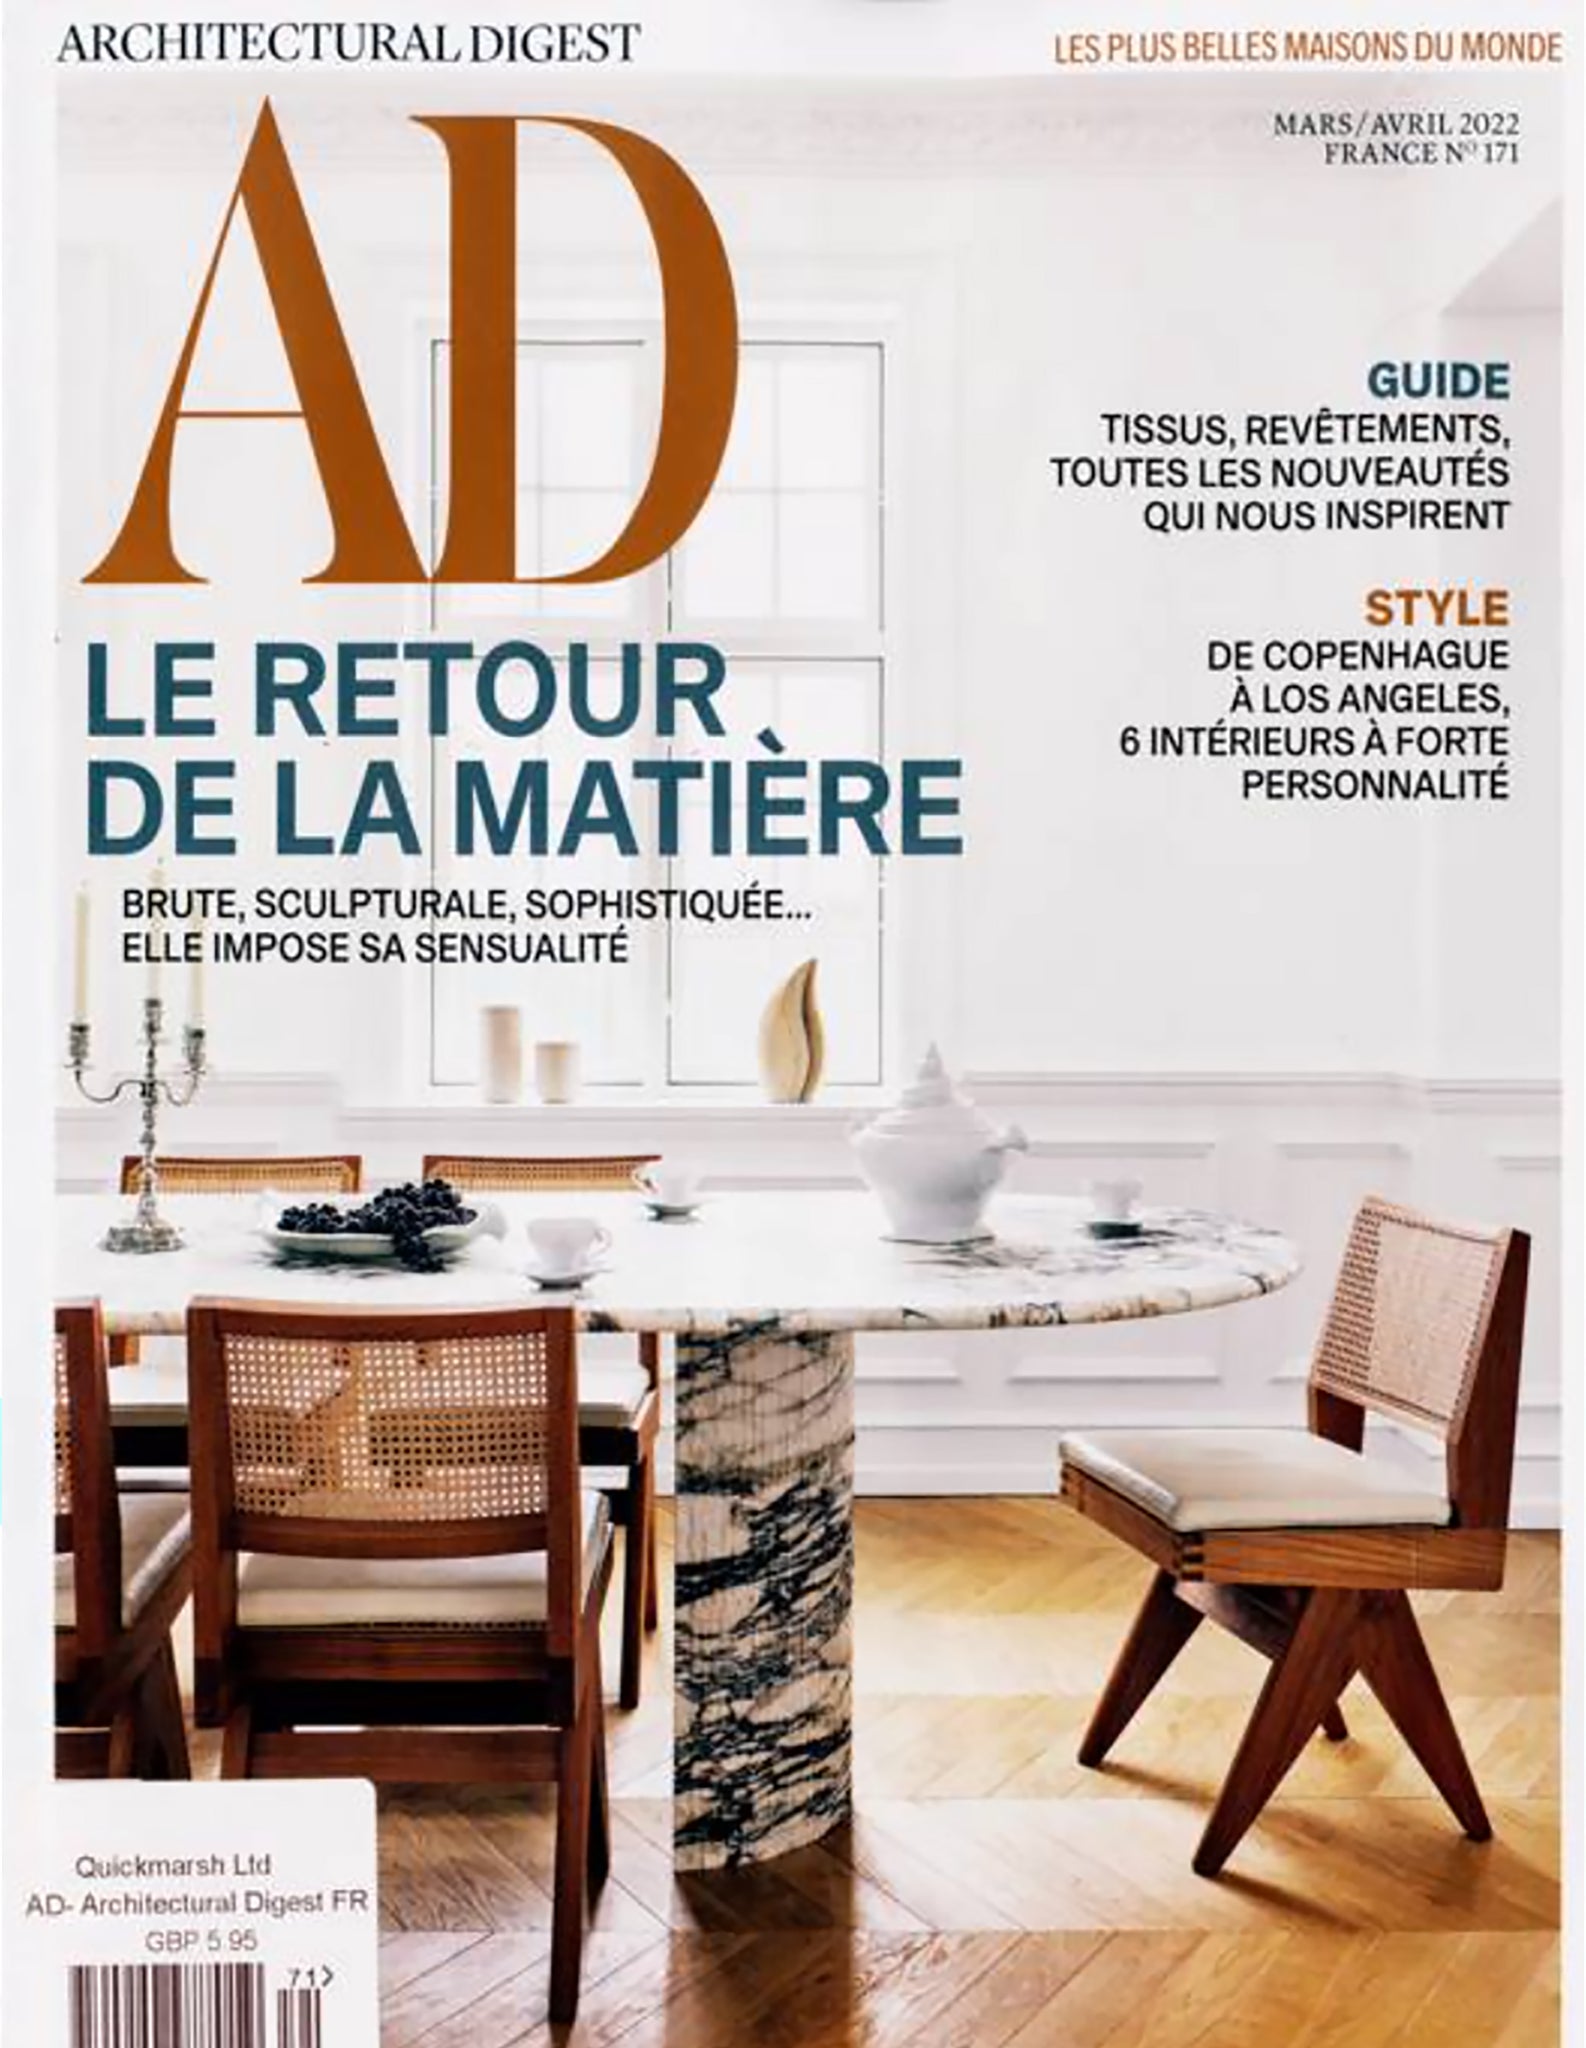 Architectural Digest France, March/April 2022